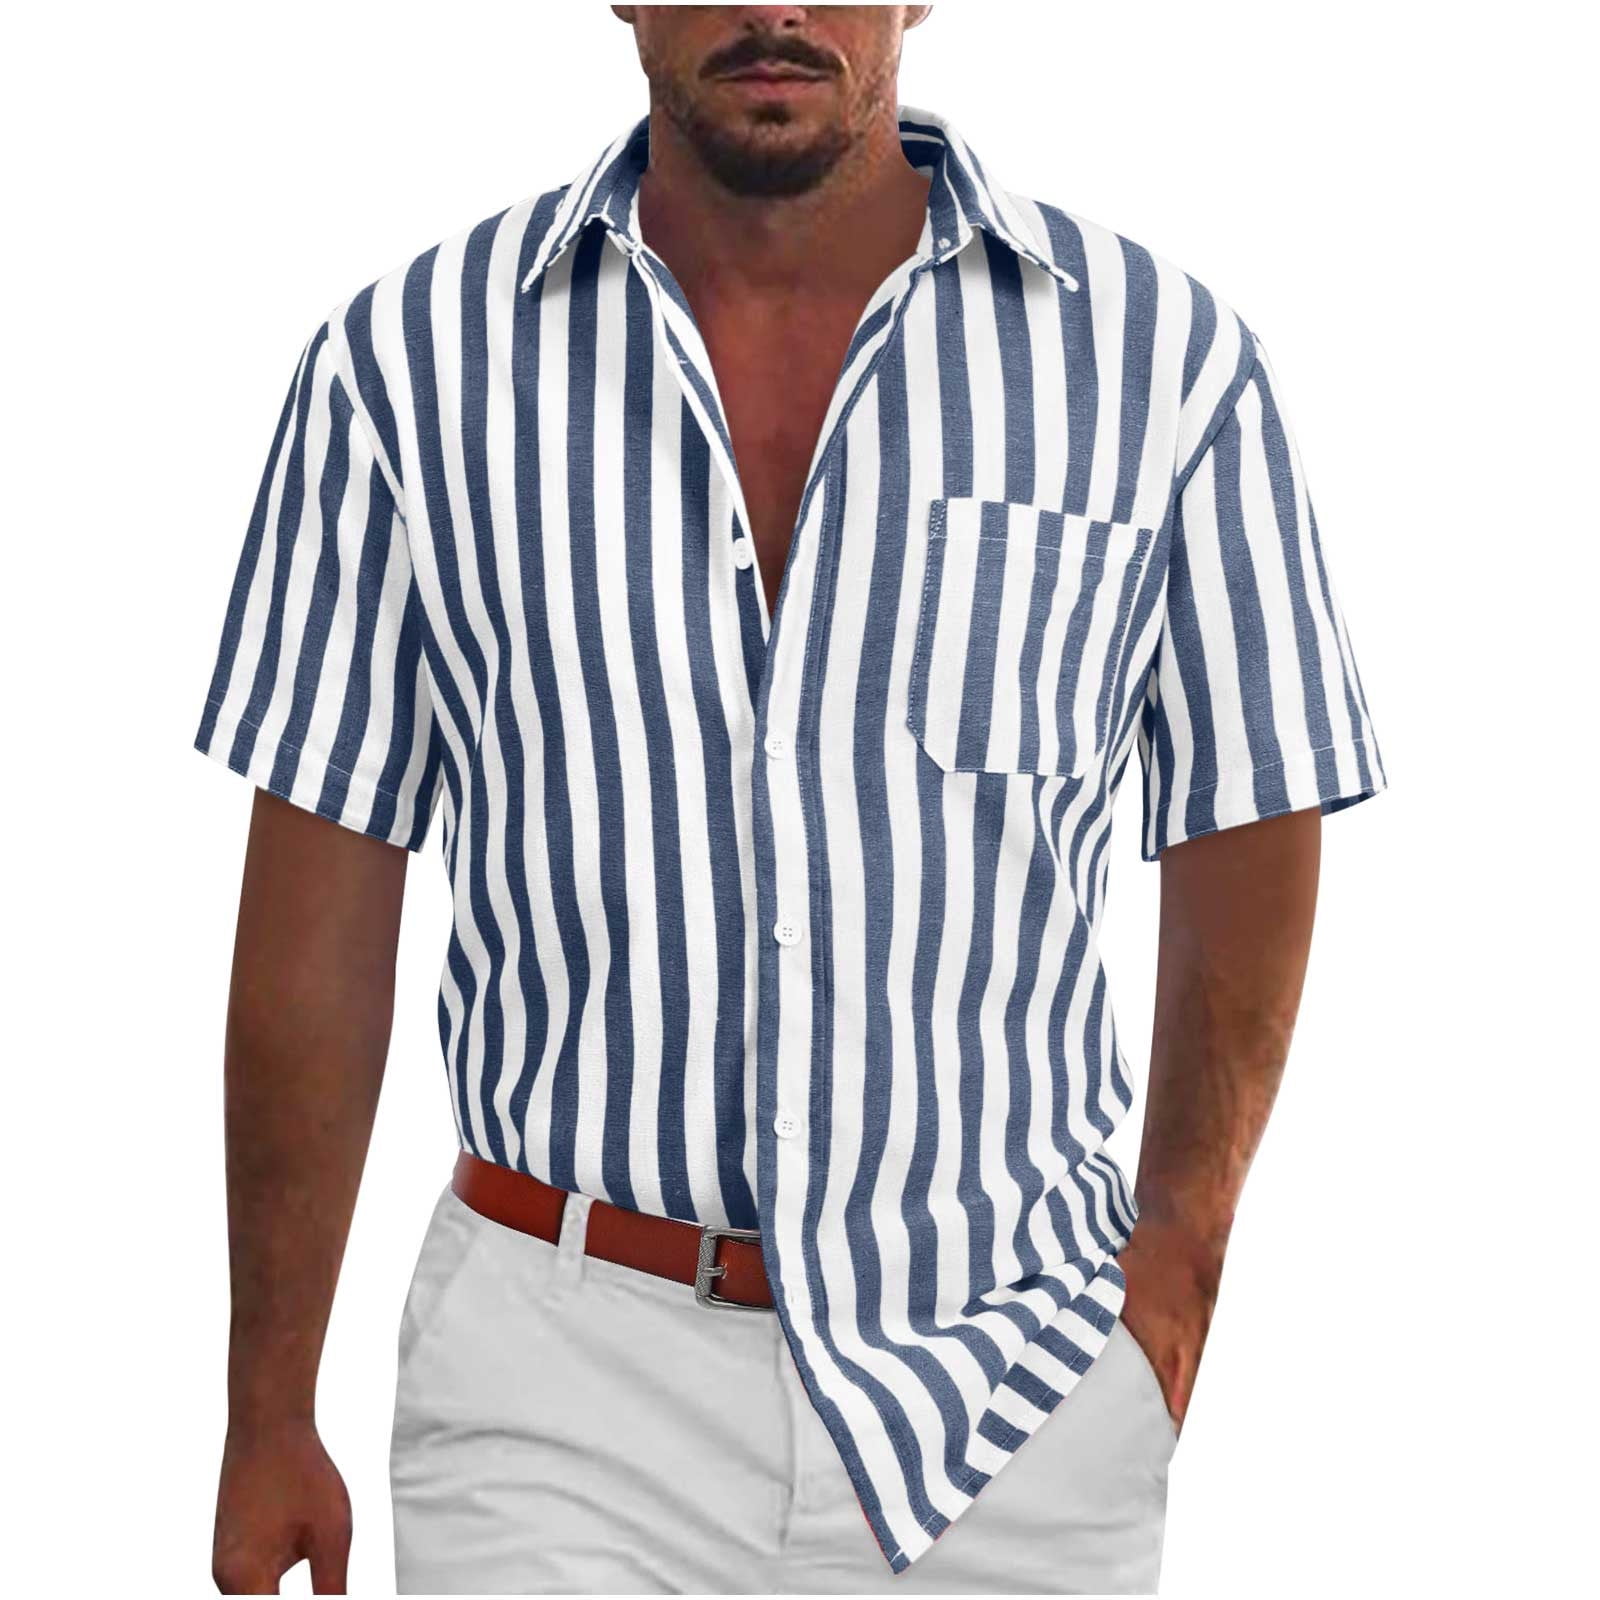 RYRJJ Men's Striped Business Dress Shirts Slim Fit Short Sleeve